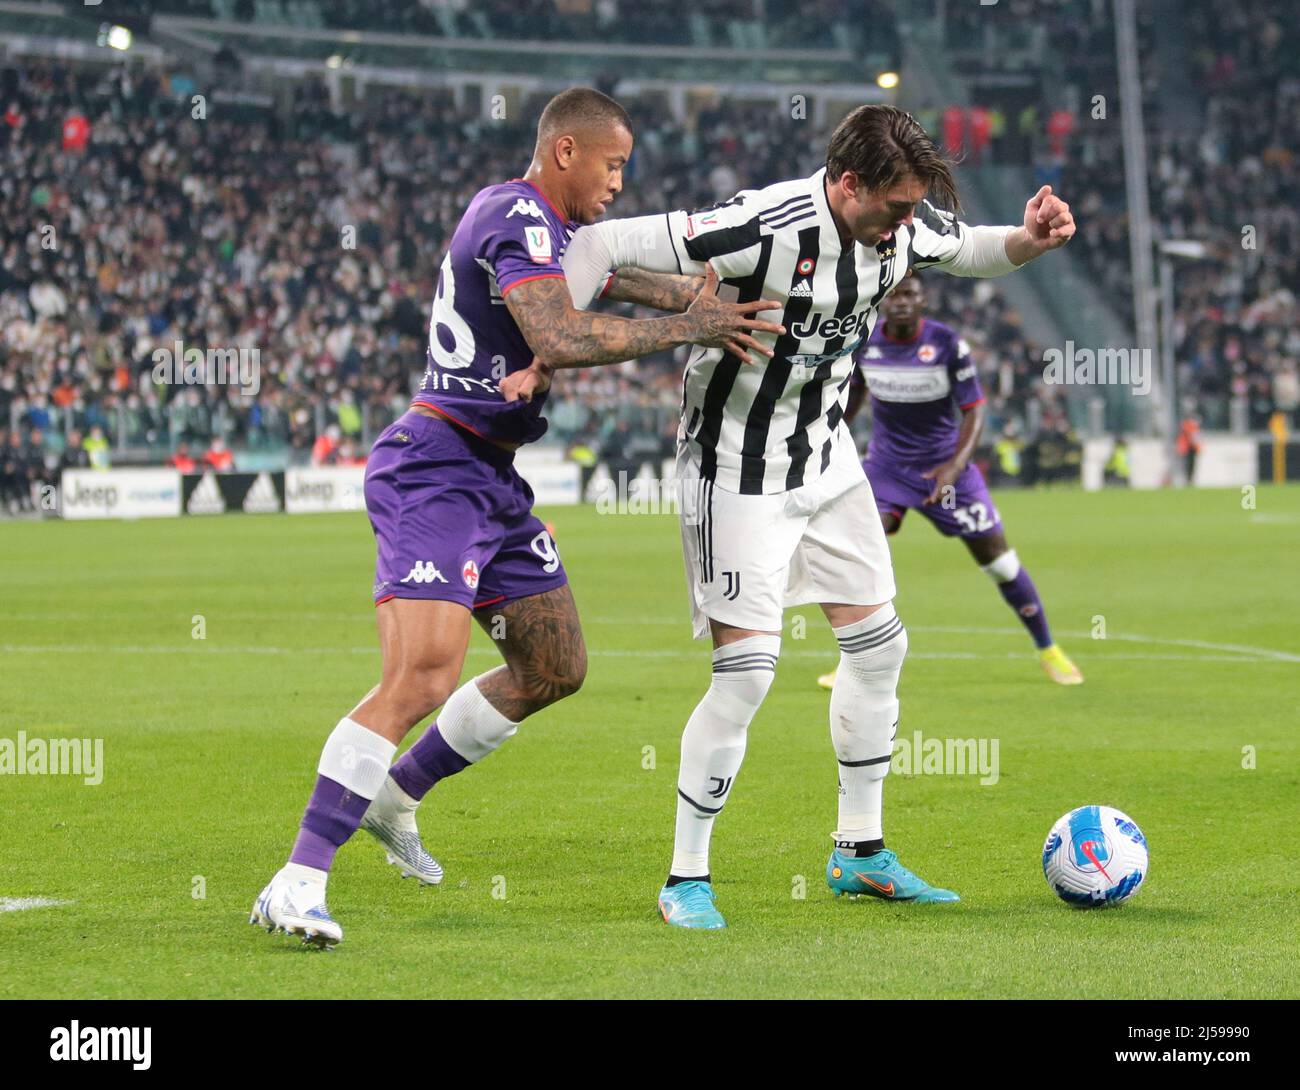 Fc Juventus   Acf Fiorentina Allianz Stadium Turin/Italien Stockfoto